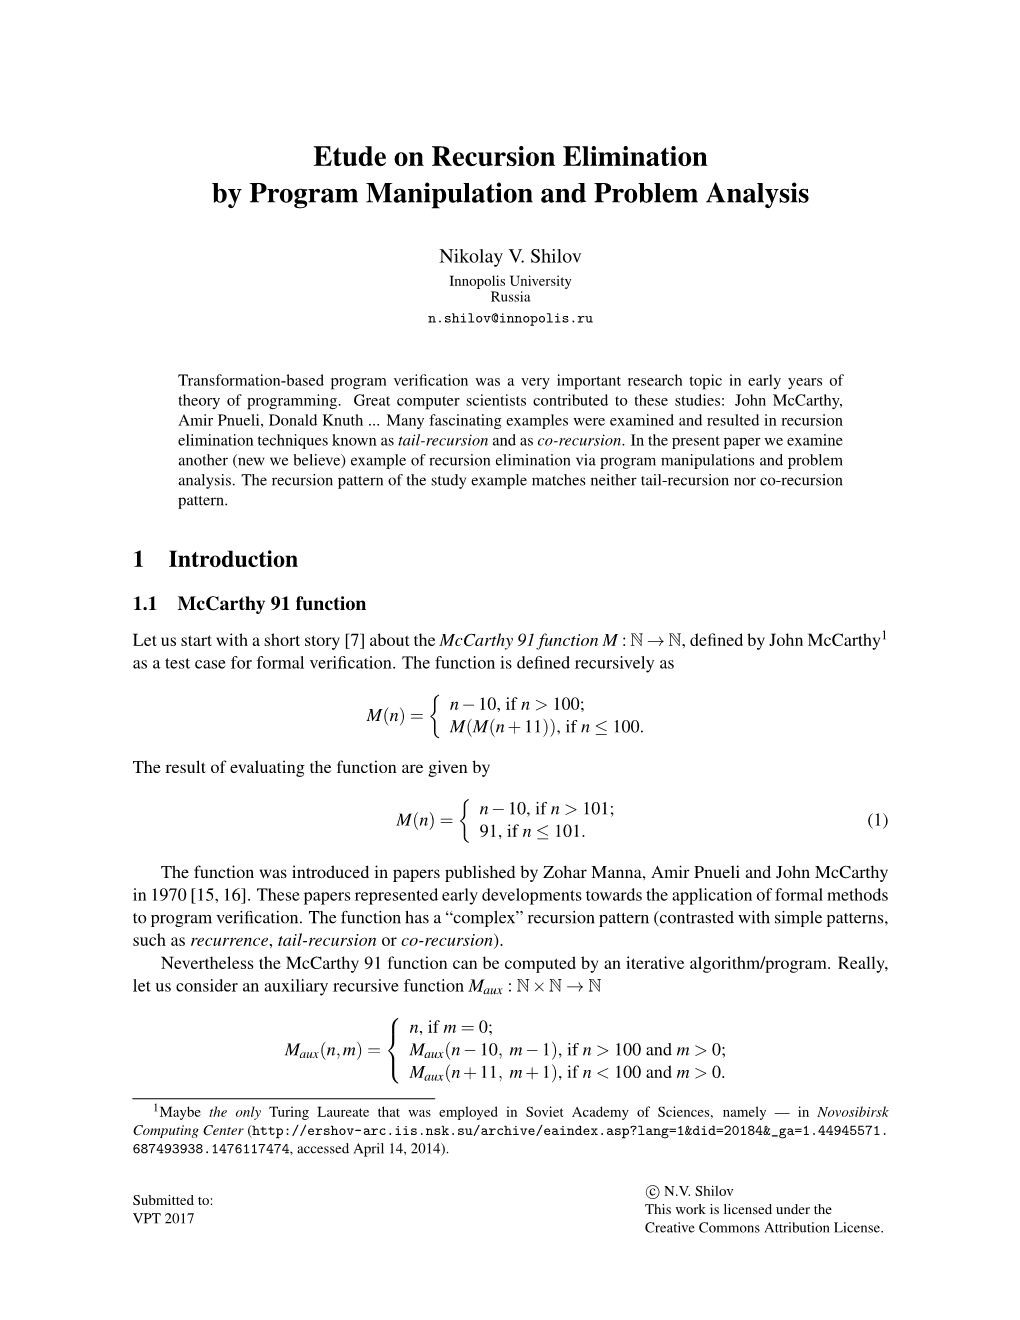 Etude on Recursion Elimination by Program Manipulation and Problem Analysis